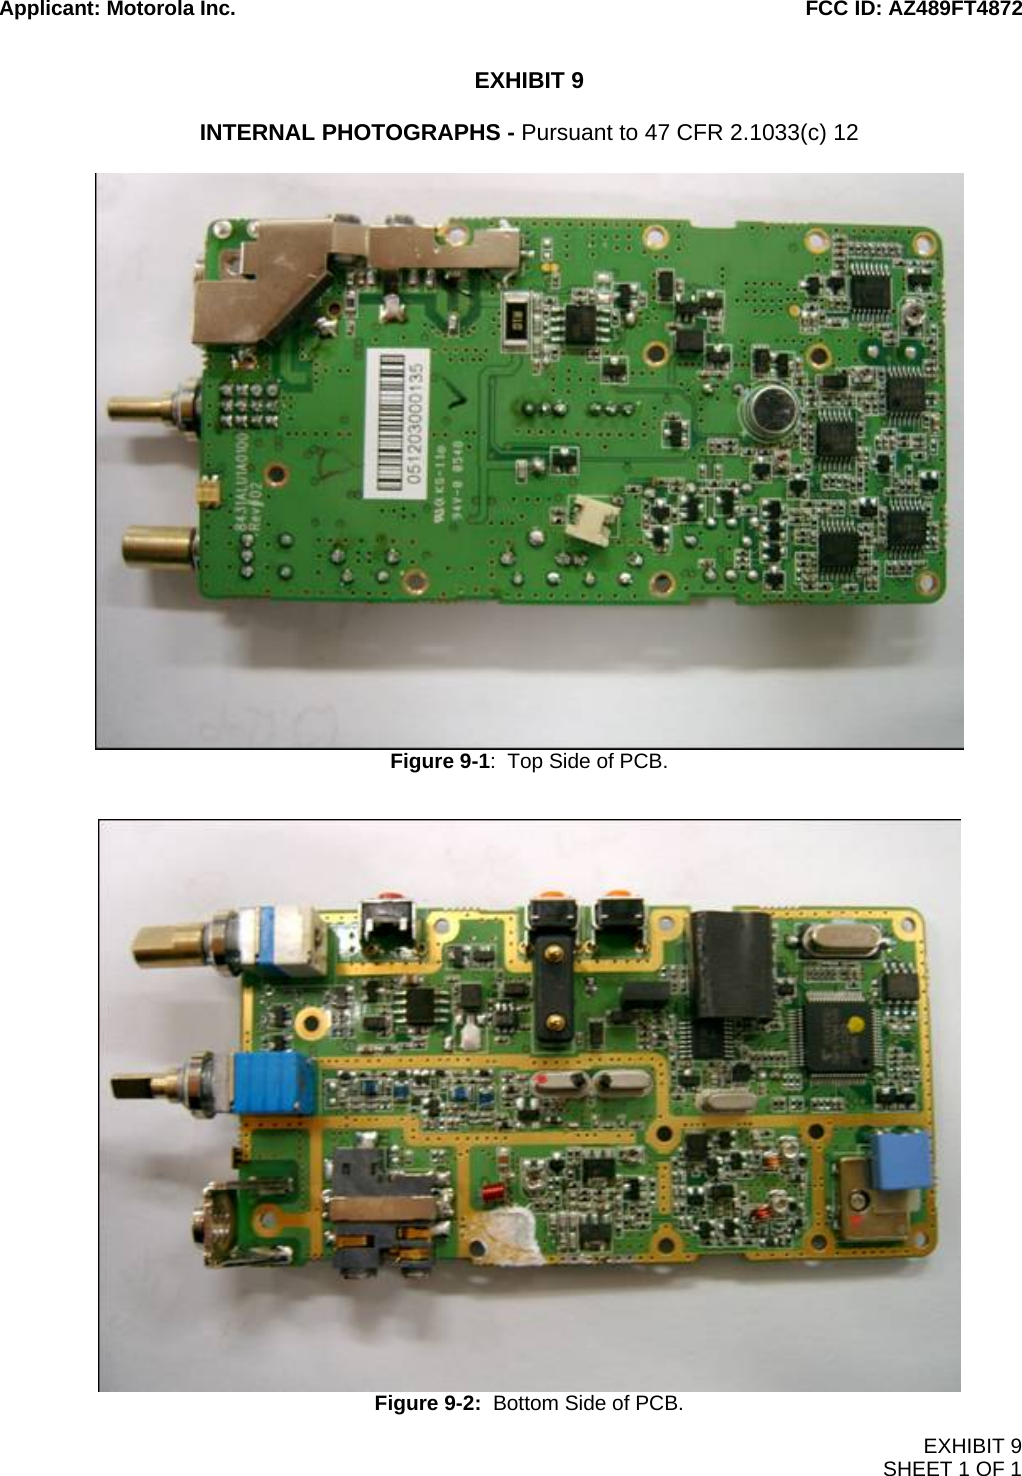 Applicant: Motorola Inc.                                                                                                   FCC ID: AZ489FT4872  EXHIBIT 9 SHEET 1 OF 1  EXHIBIT 9  INTERNAL PHOTOGRAPHS - Pursuant to 47 CFR 2.1033(c) 12   Figure 9-1:  Top Side of PCB.    Figure 9-2:  Bottom Side of PCB. 